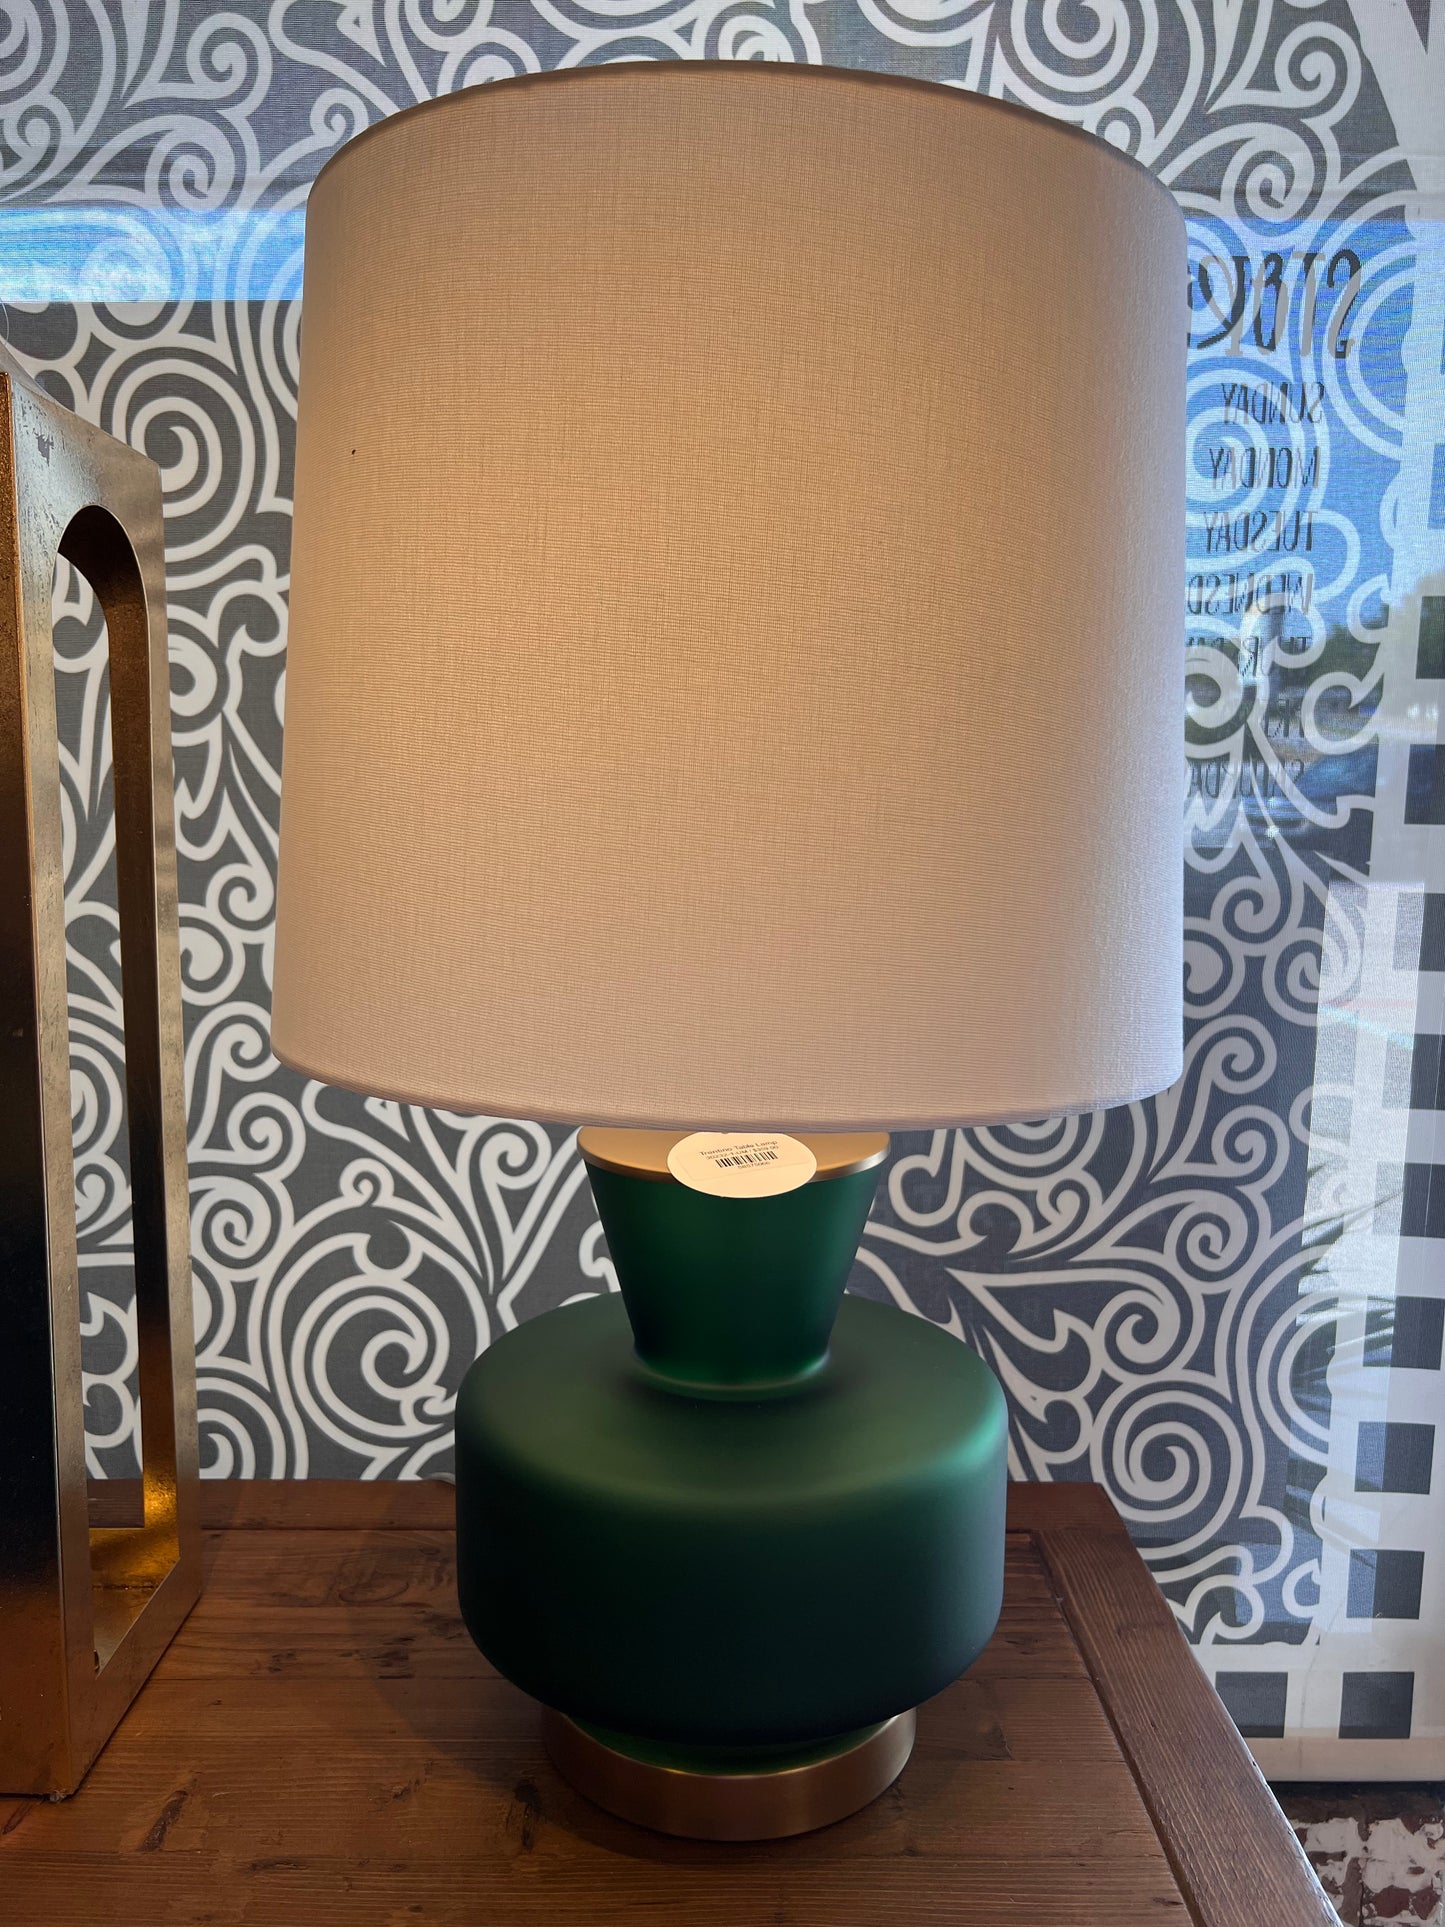 Trentino Table Lamp